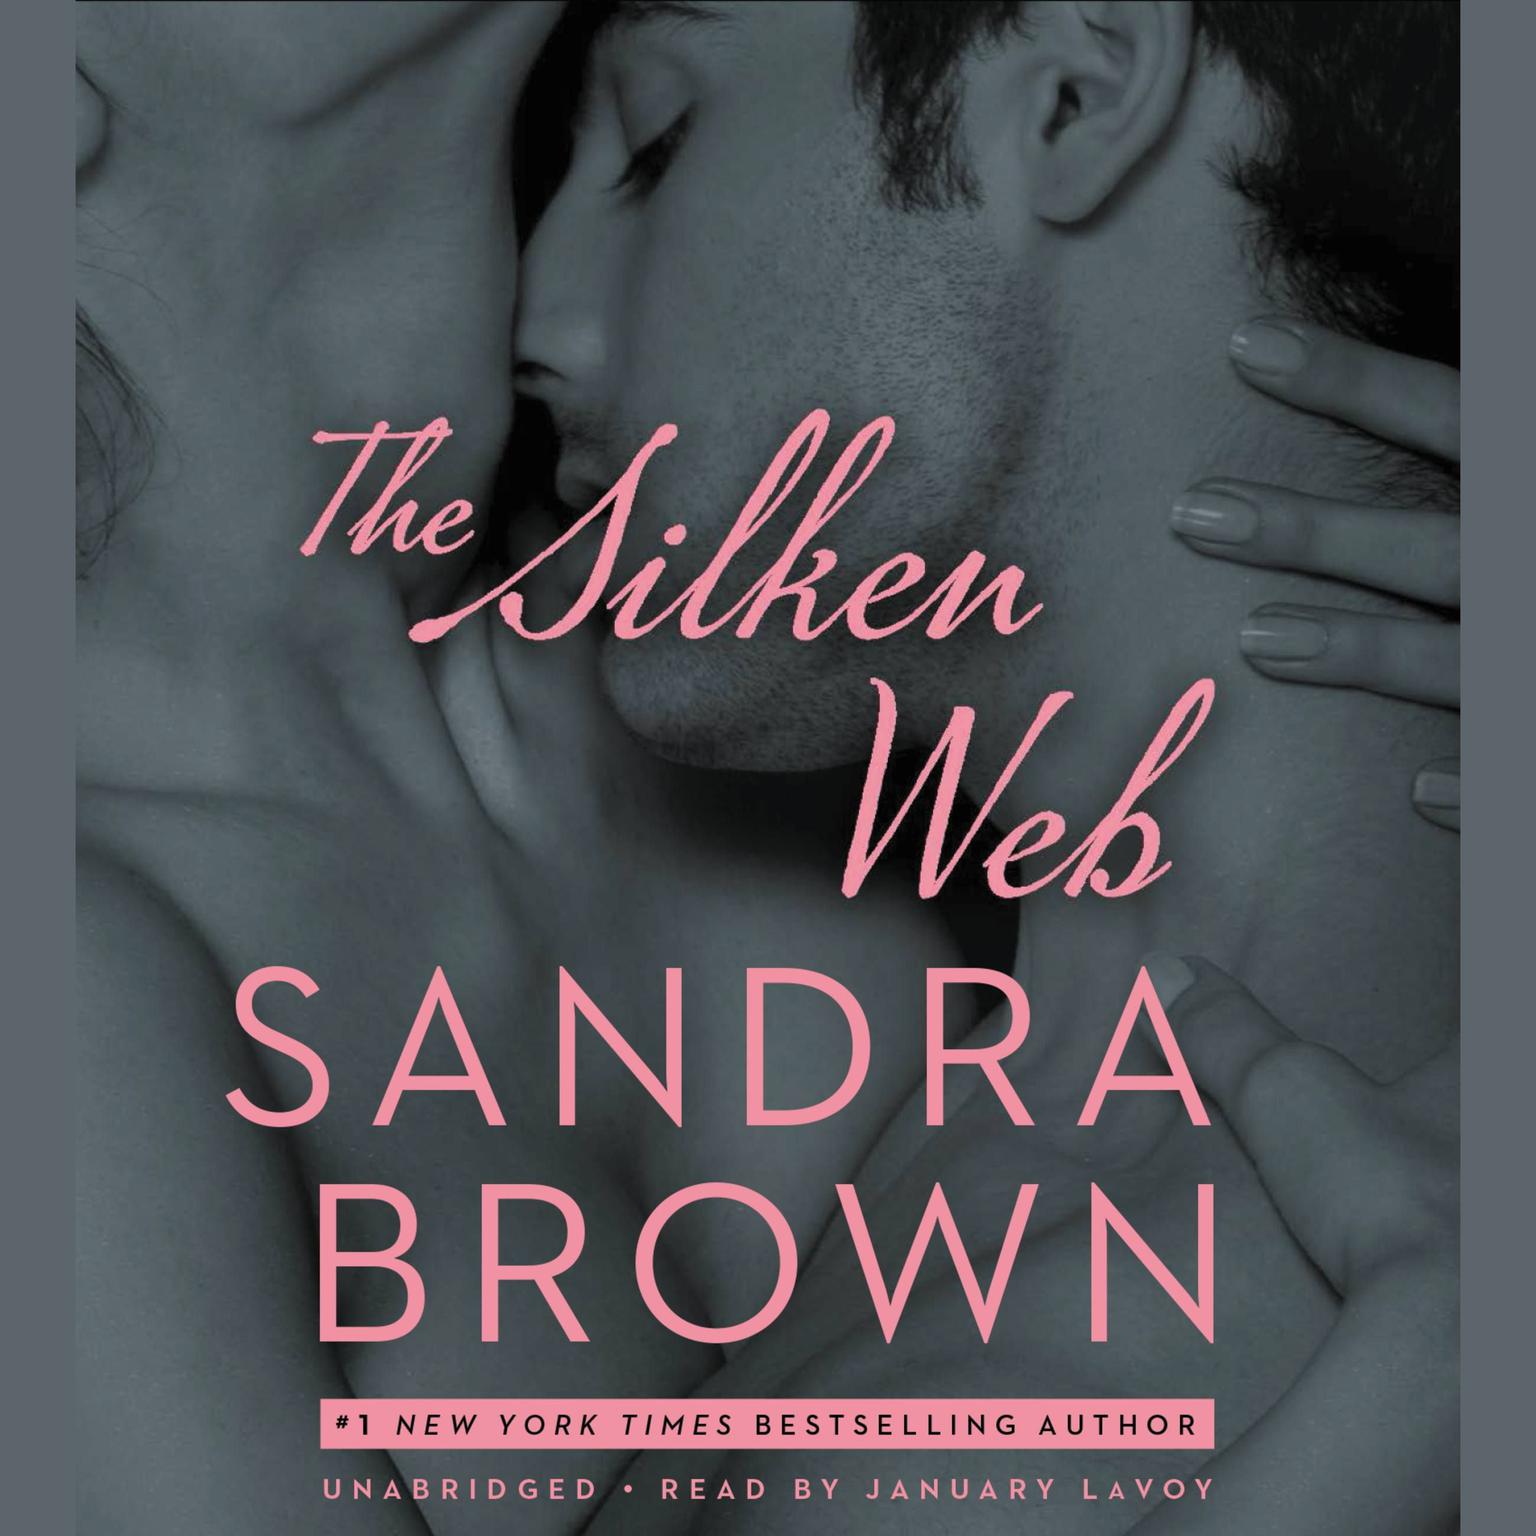 The Silken Web Audiobook, by Sandra Brown